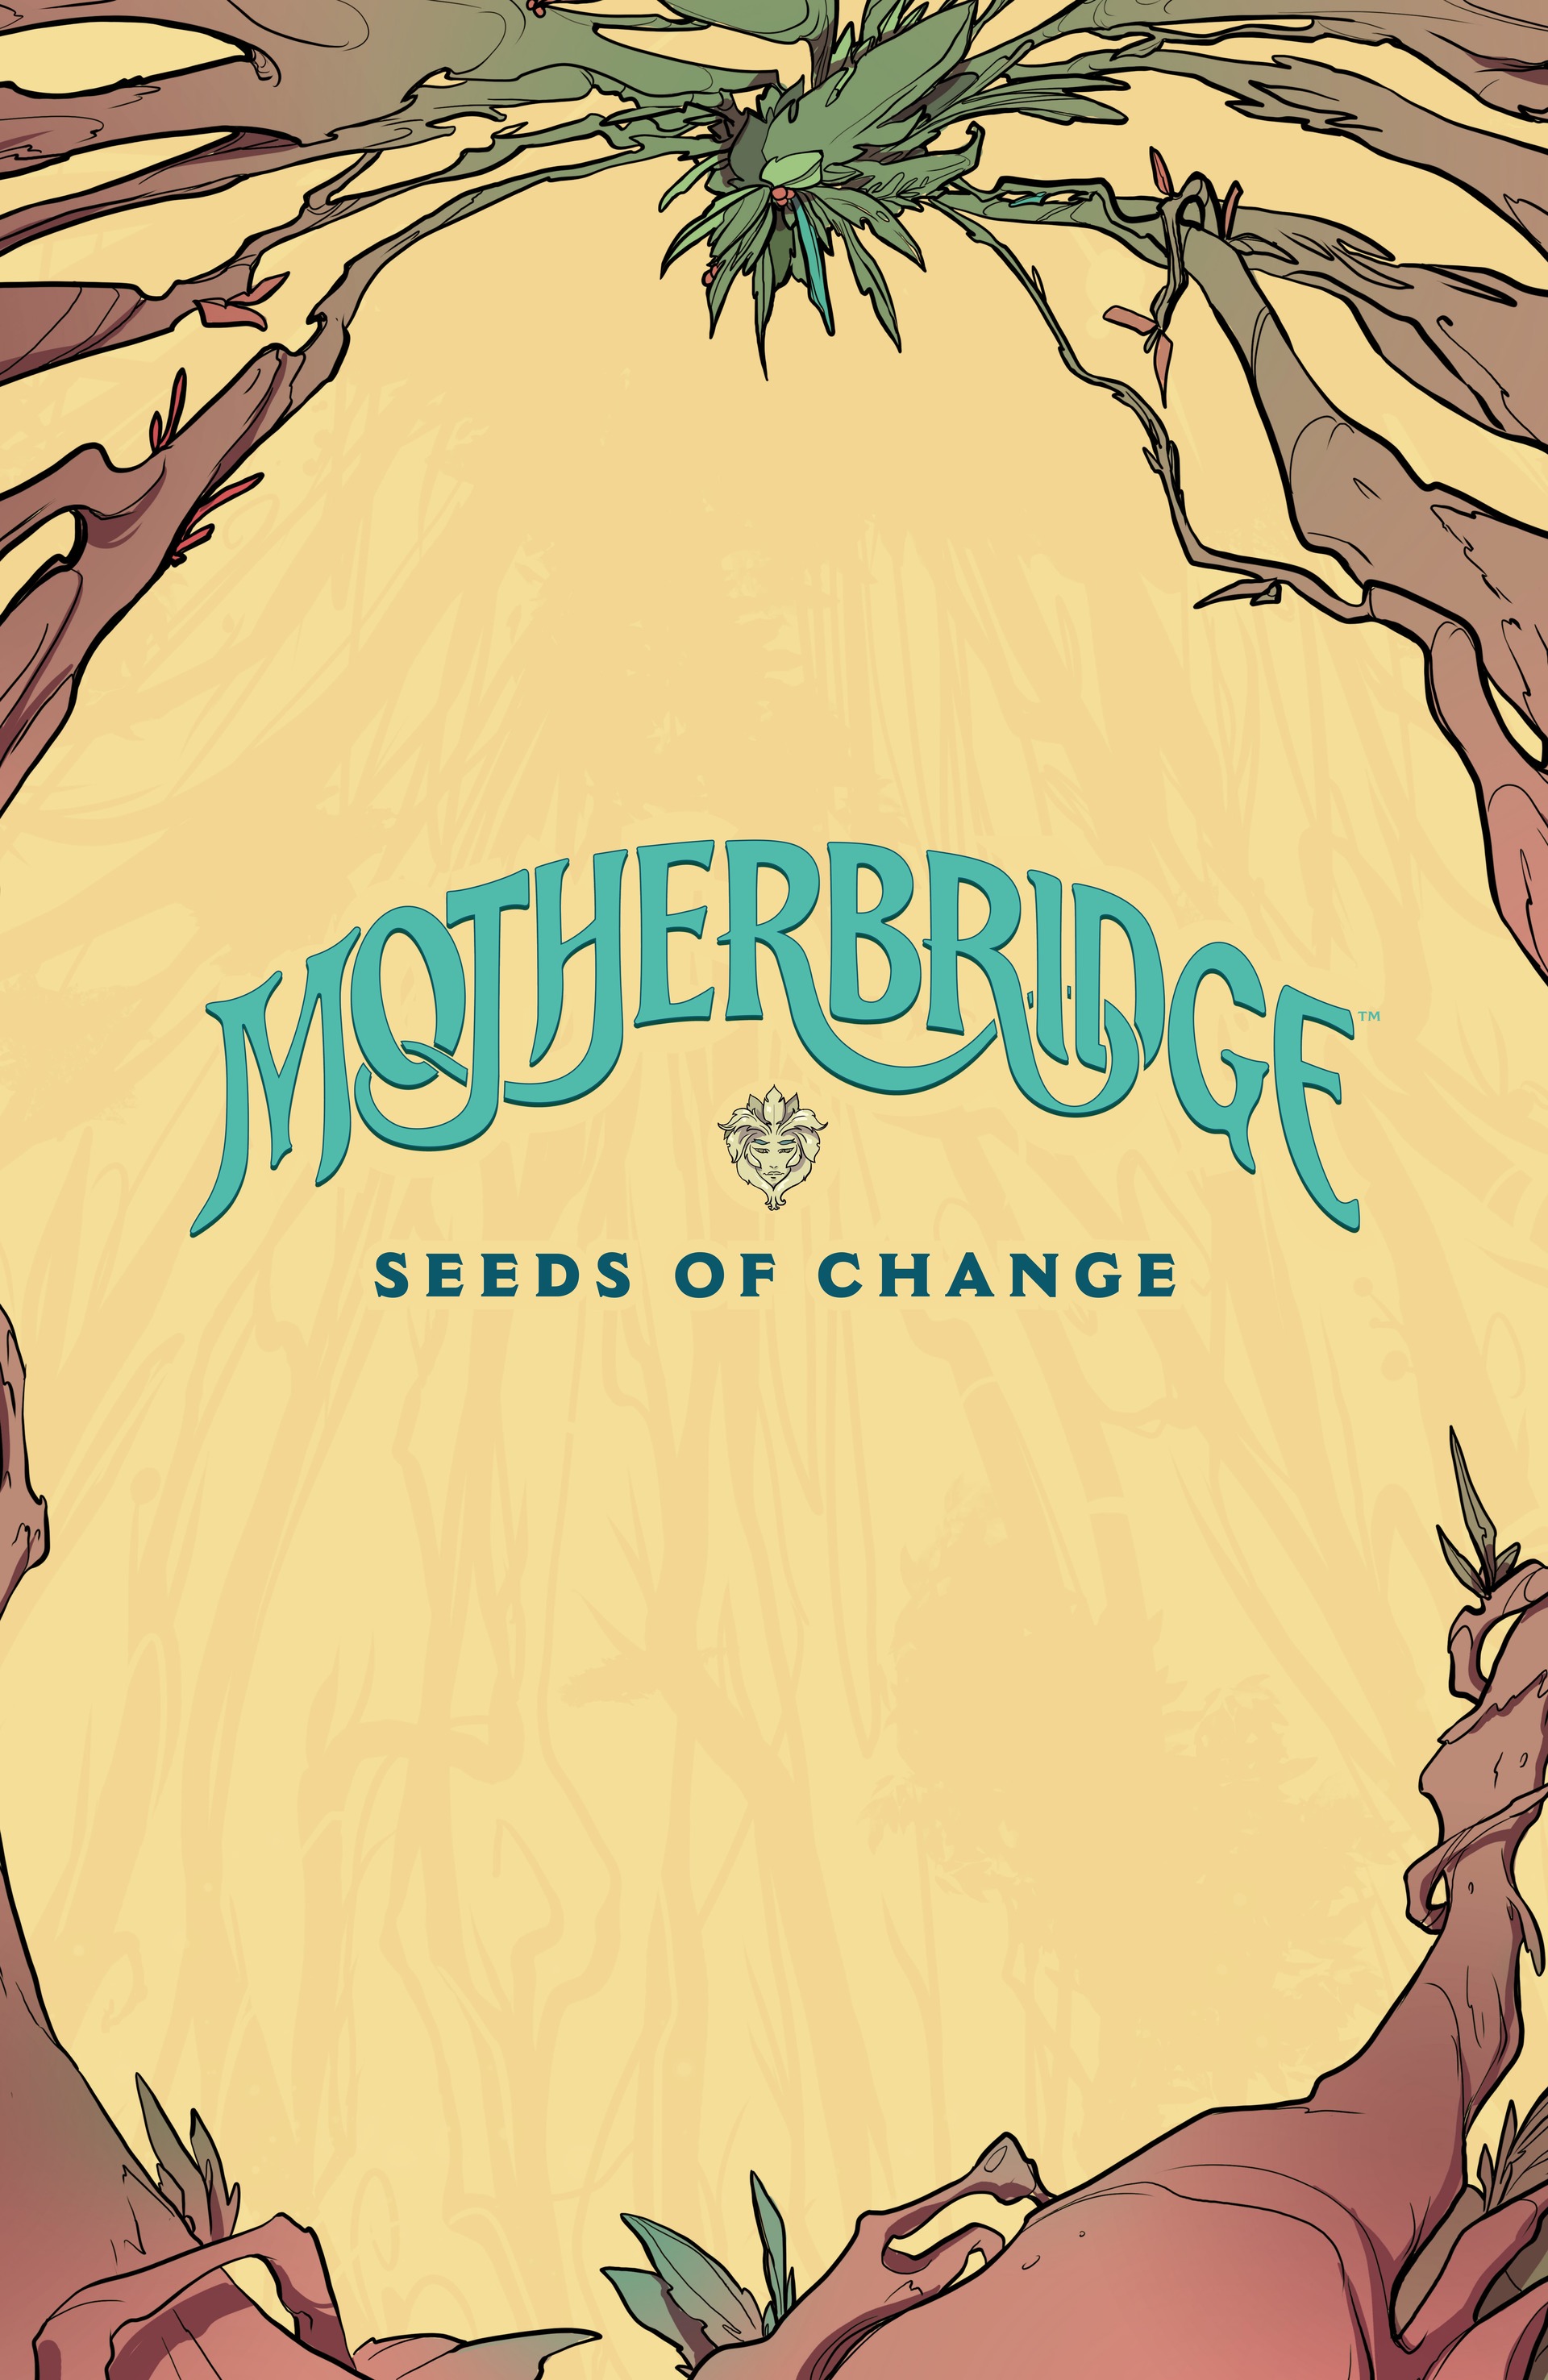 Read online Motherbridge: Seeds of Change comic -  Issue # TPB - 3